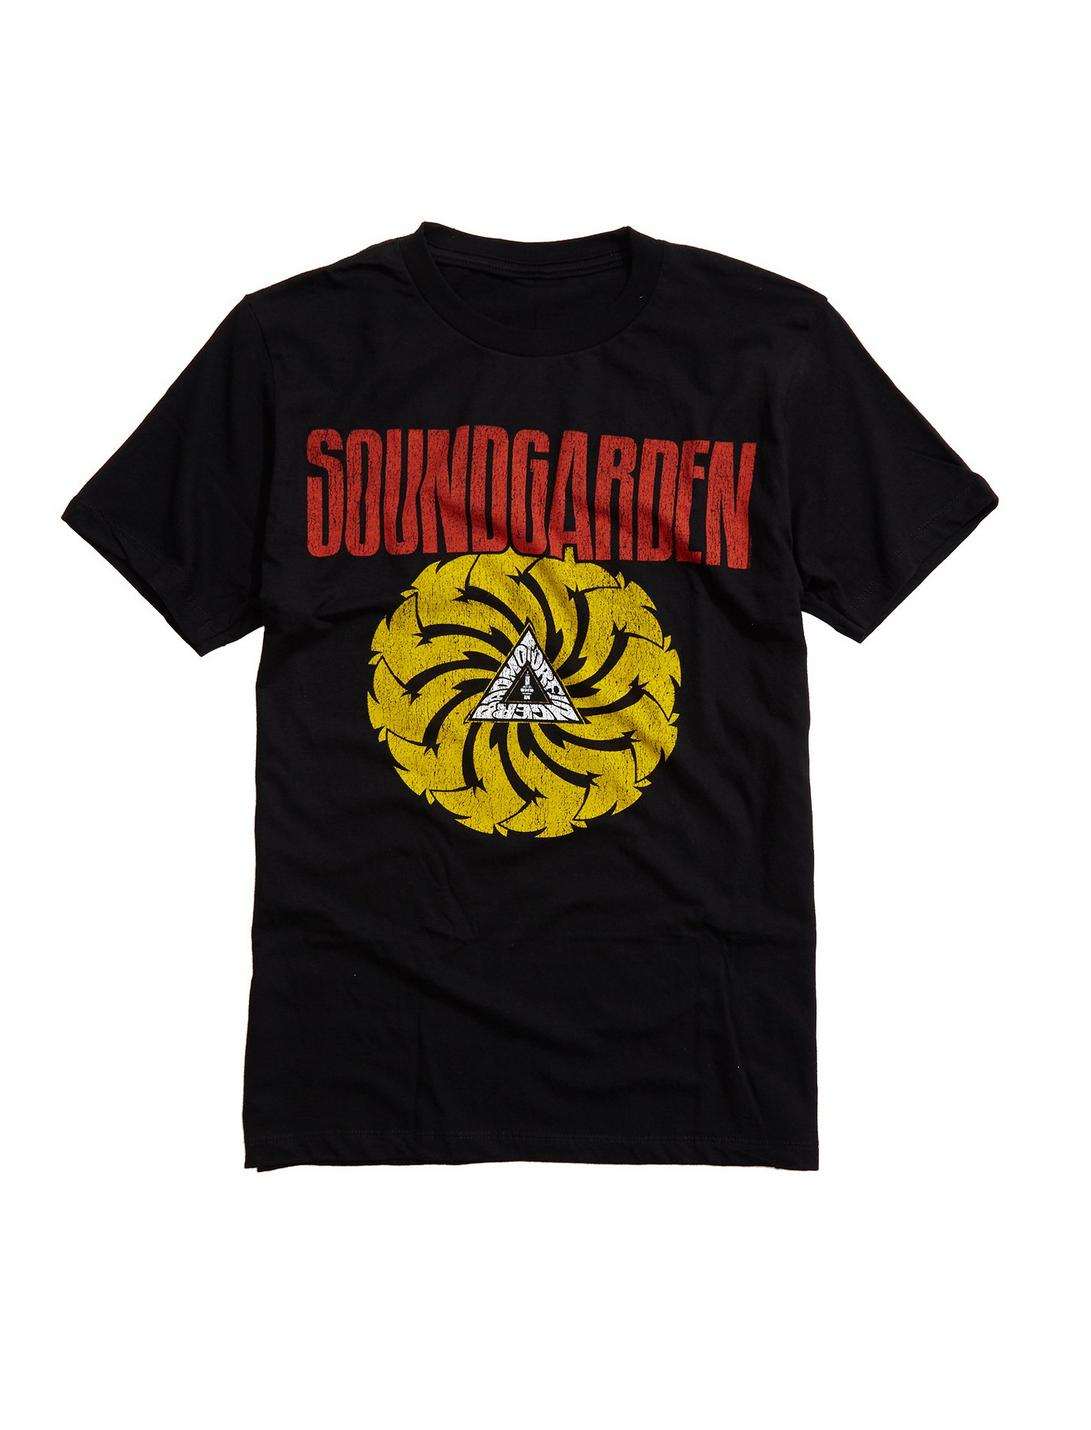 Soundgarden Badmotorfinger T-Shirt, BLACK, hi-res